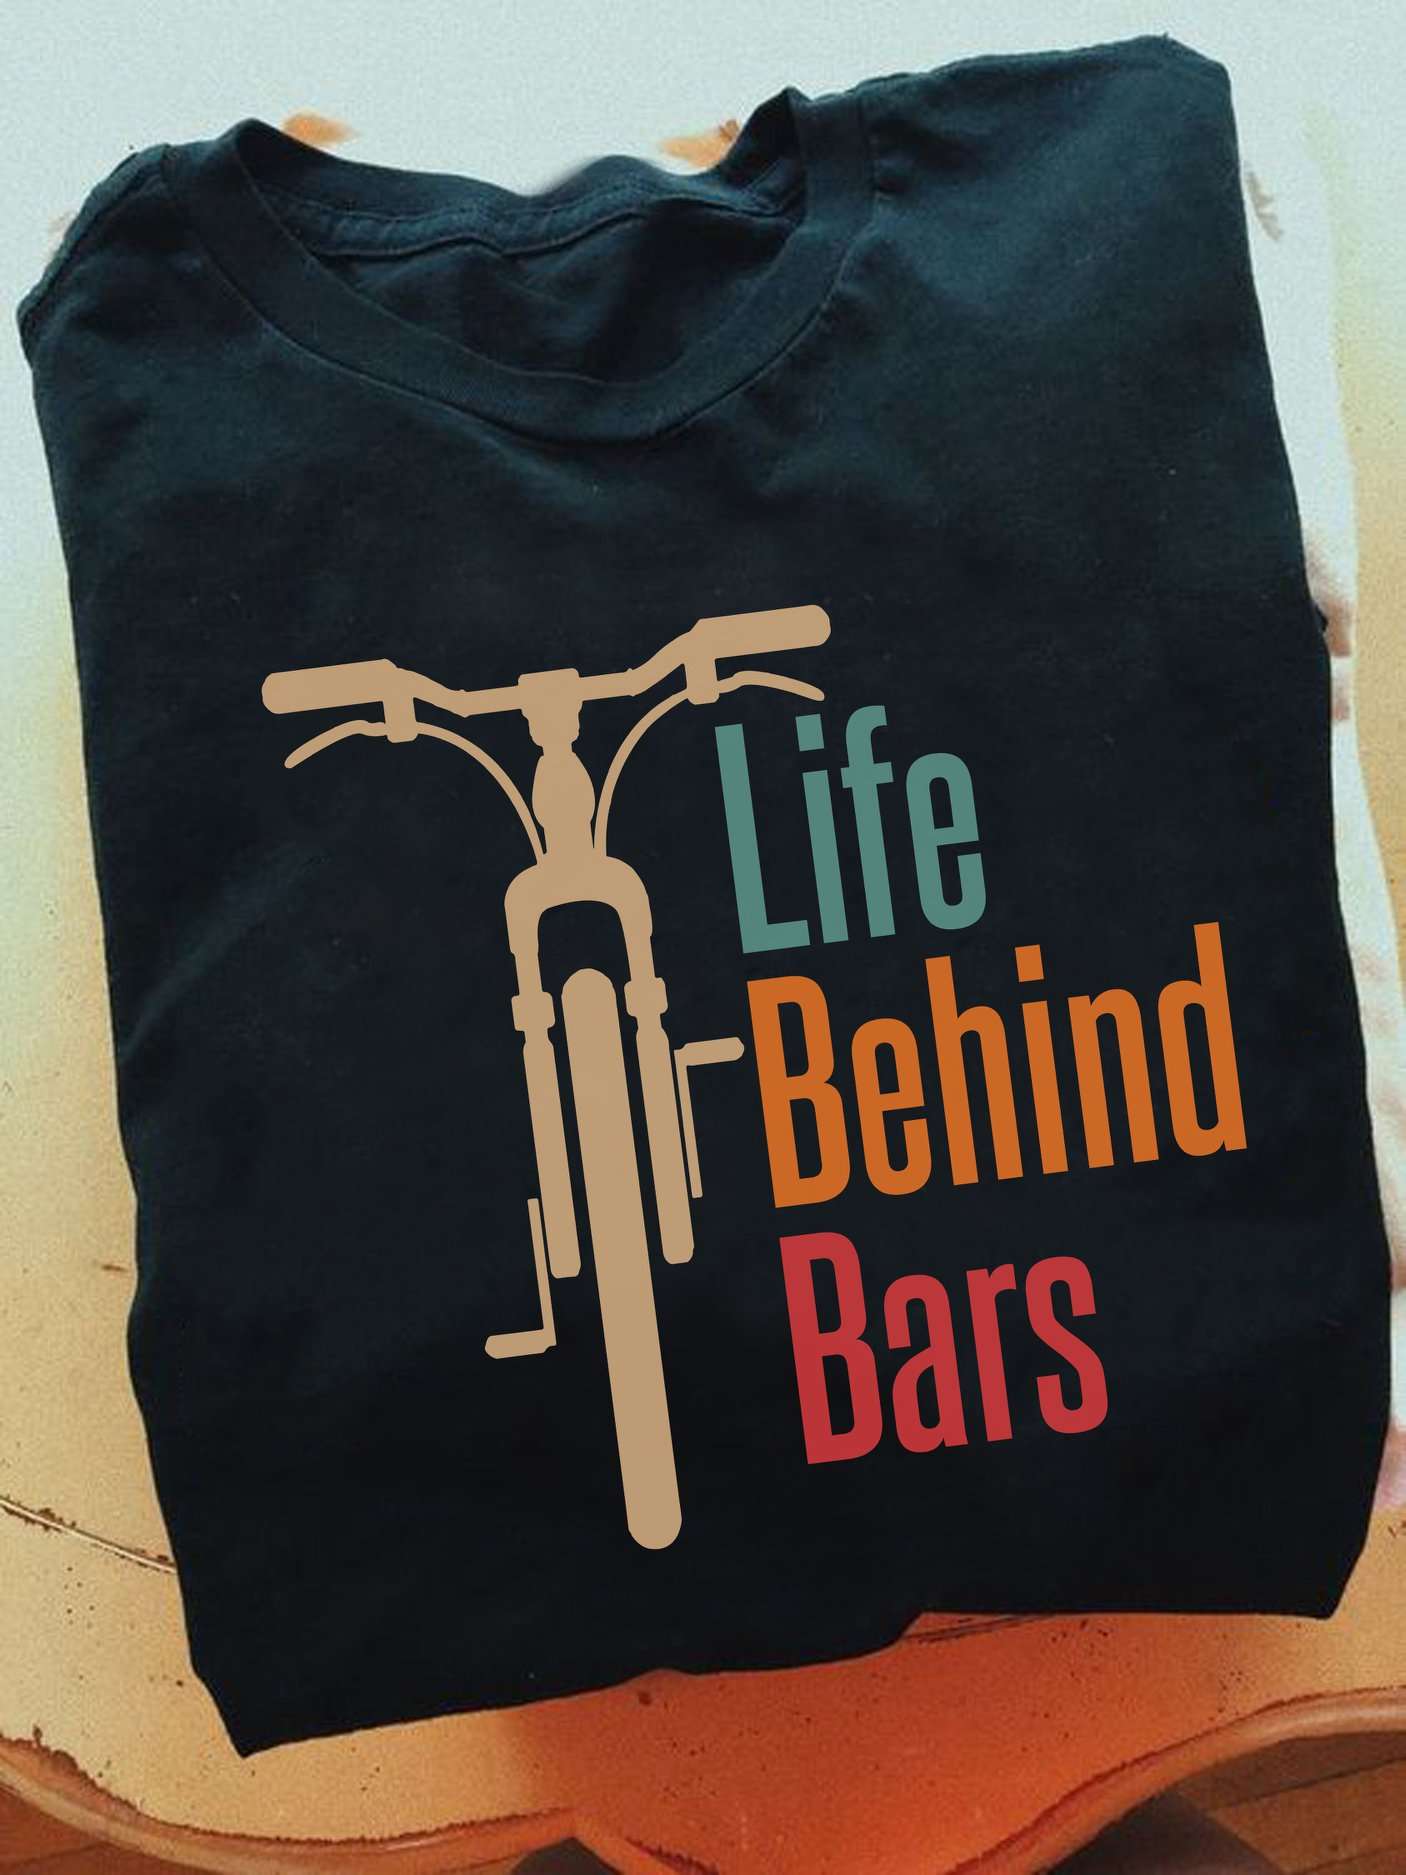 Life behind bars - Biker's life, the cycologist